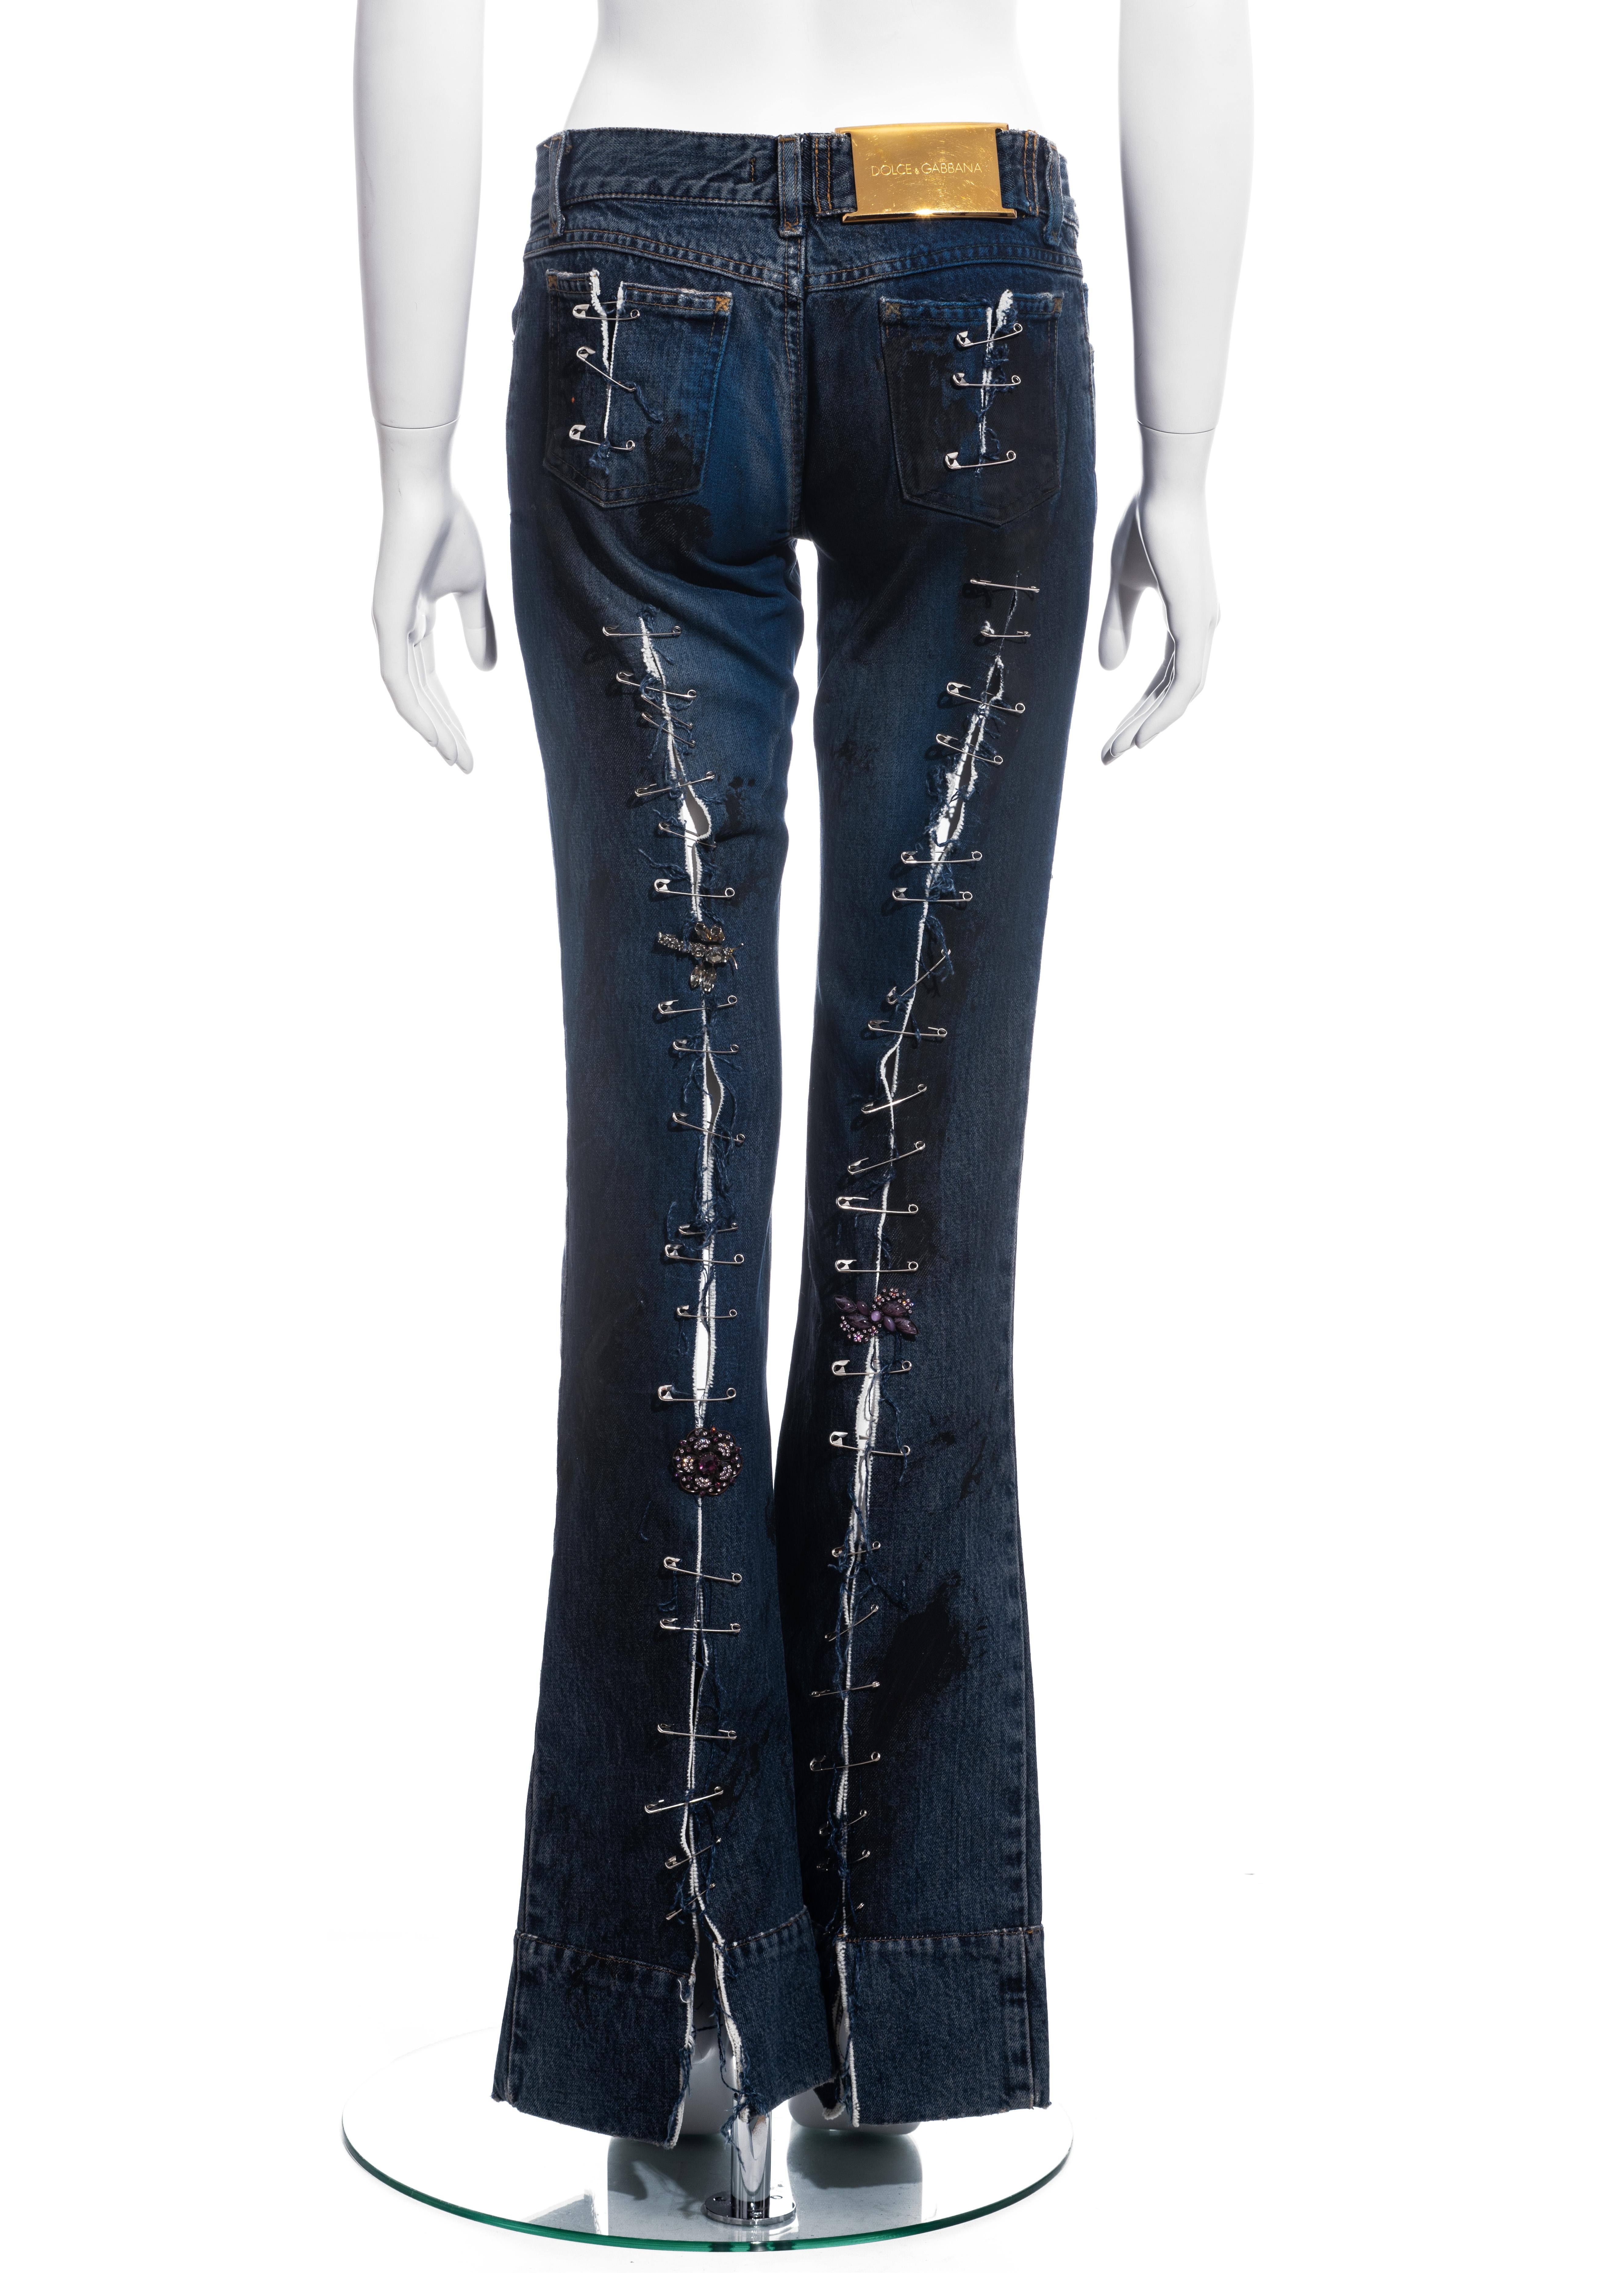 Women's Dolce & Gabbana indigo denim graffiti punk jeans with safety pins, ss 2001